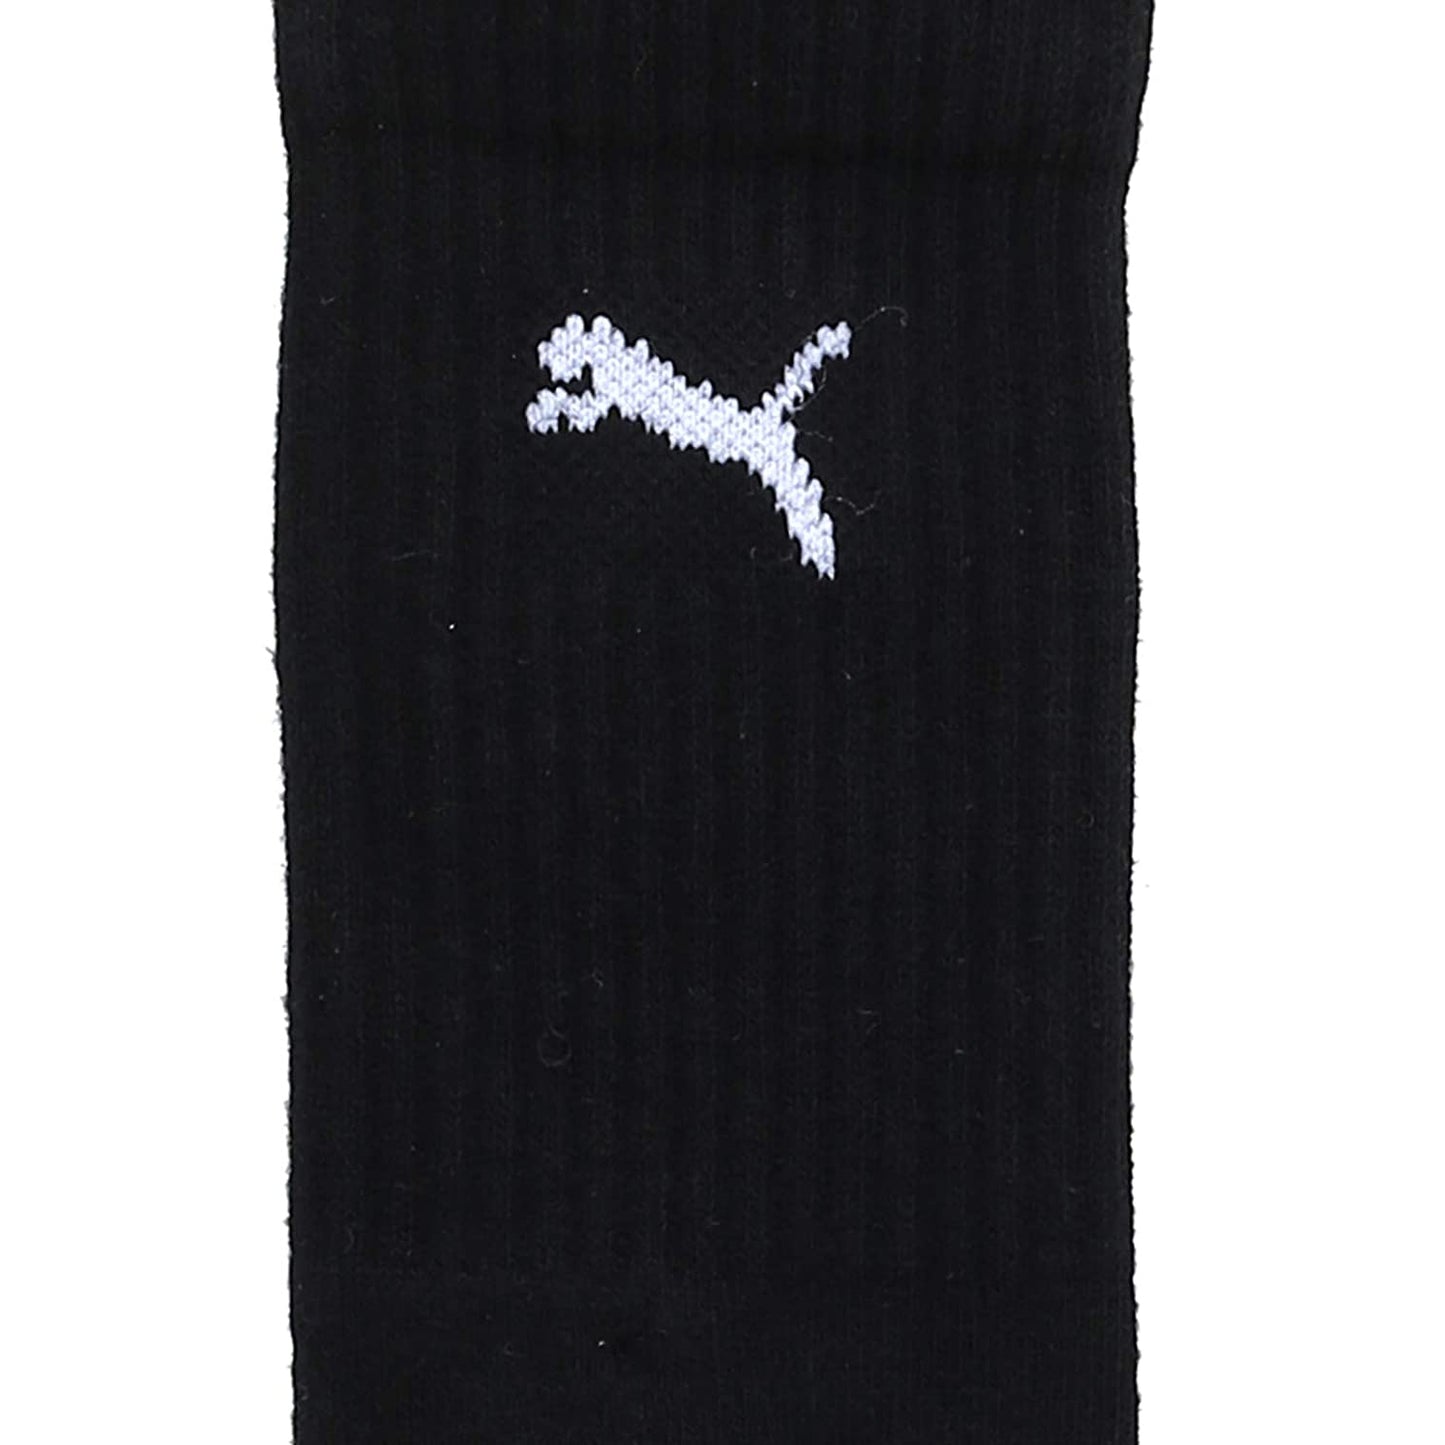 Puma Kids Crew Cushioned Sole Junior Socks,3 Pairs, Black/Black/Black - Best Price online Prokicksports.com